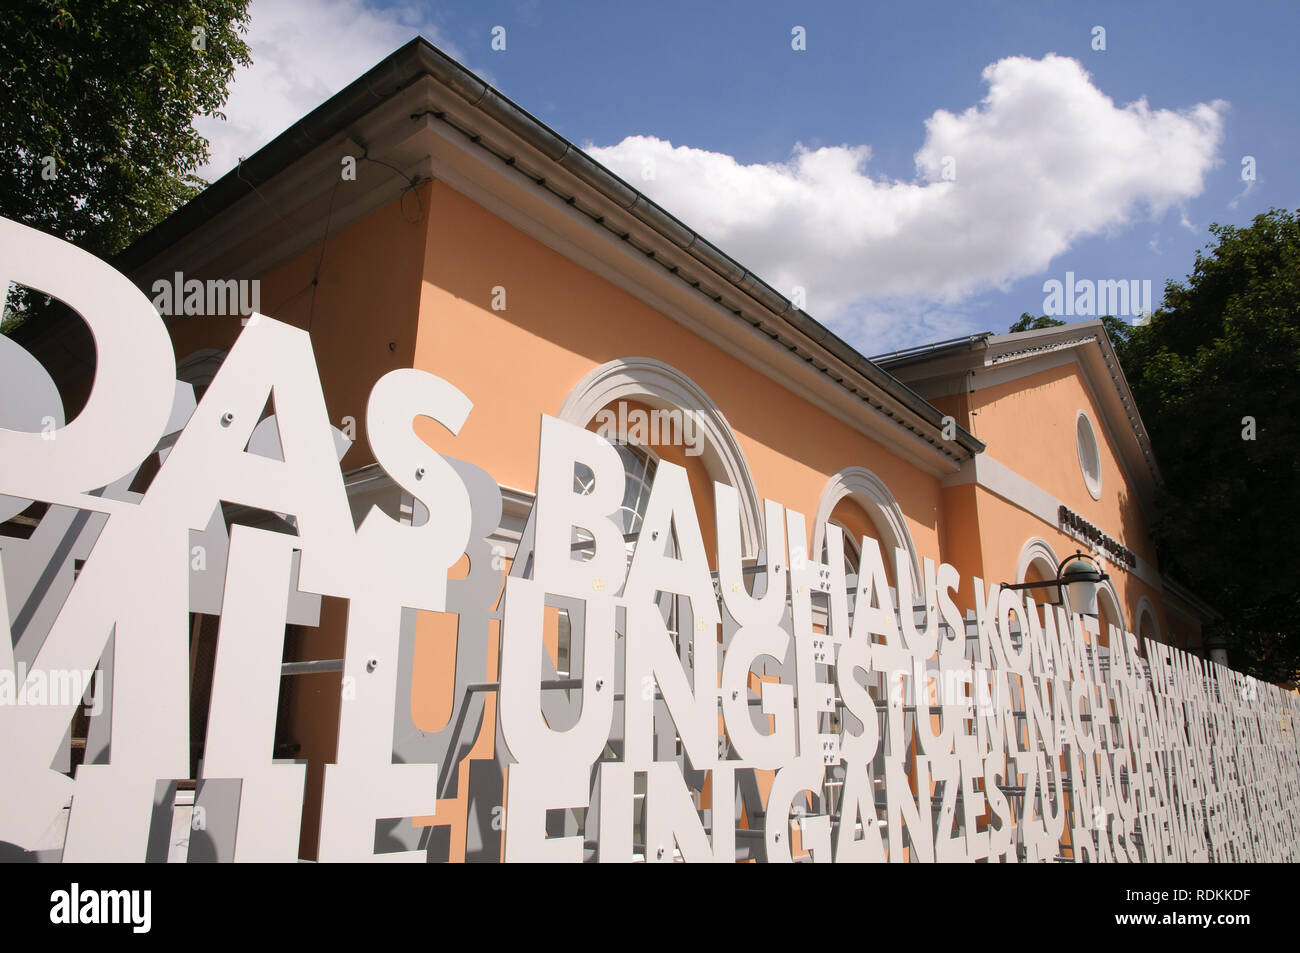 Das alte Bauhaus-Museum in Weimar ist seit Anfang 2018 geschlossen, Thüringen, Deutschland, Europa Foto Stock